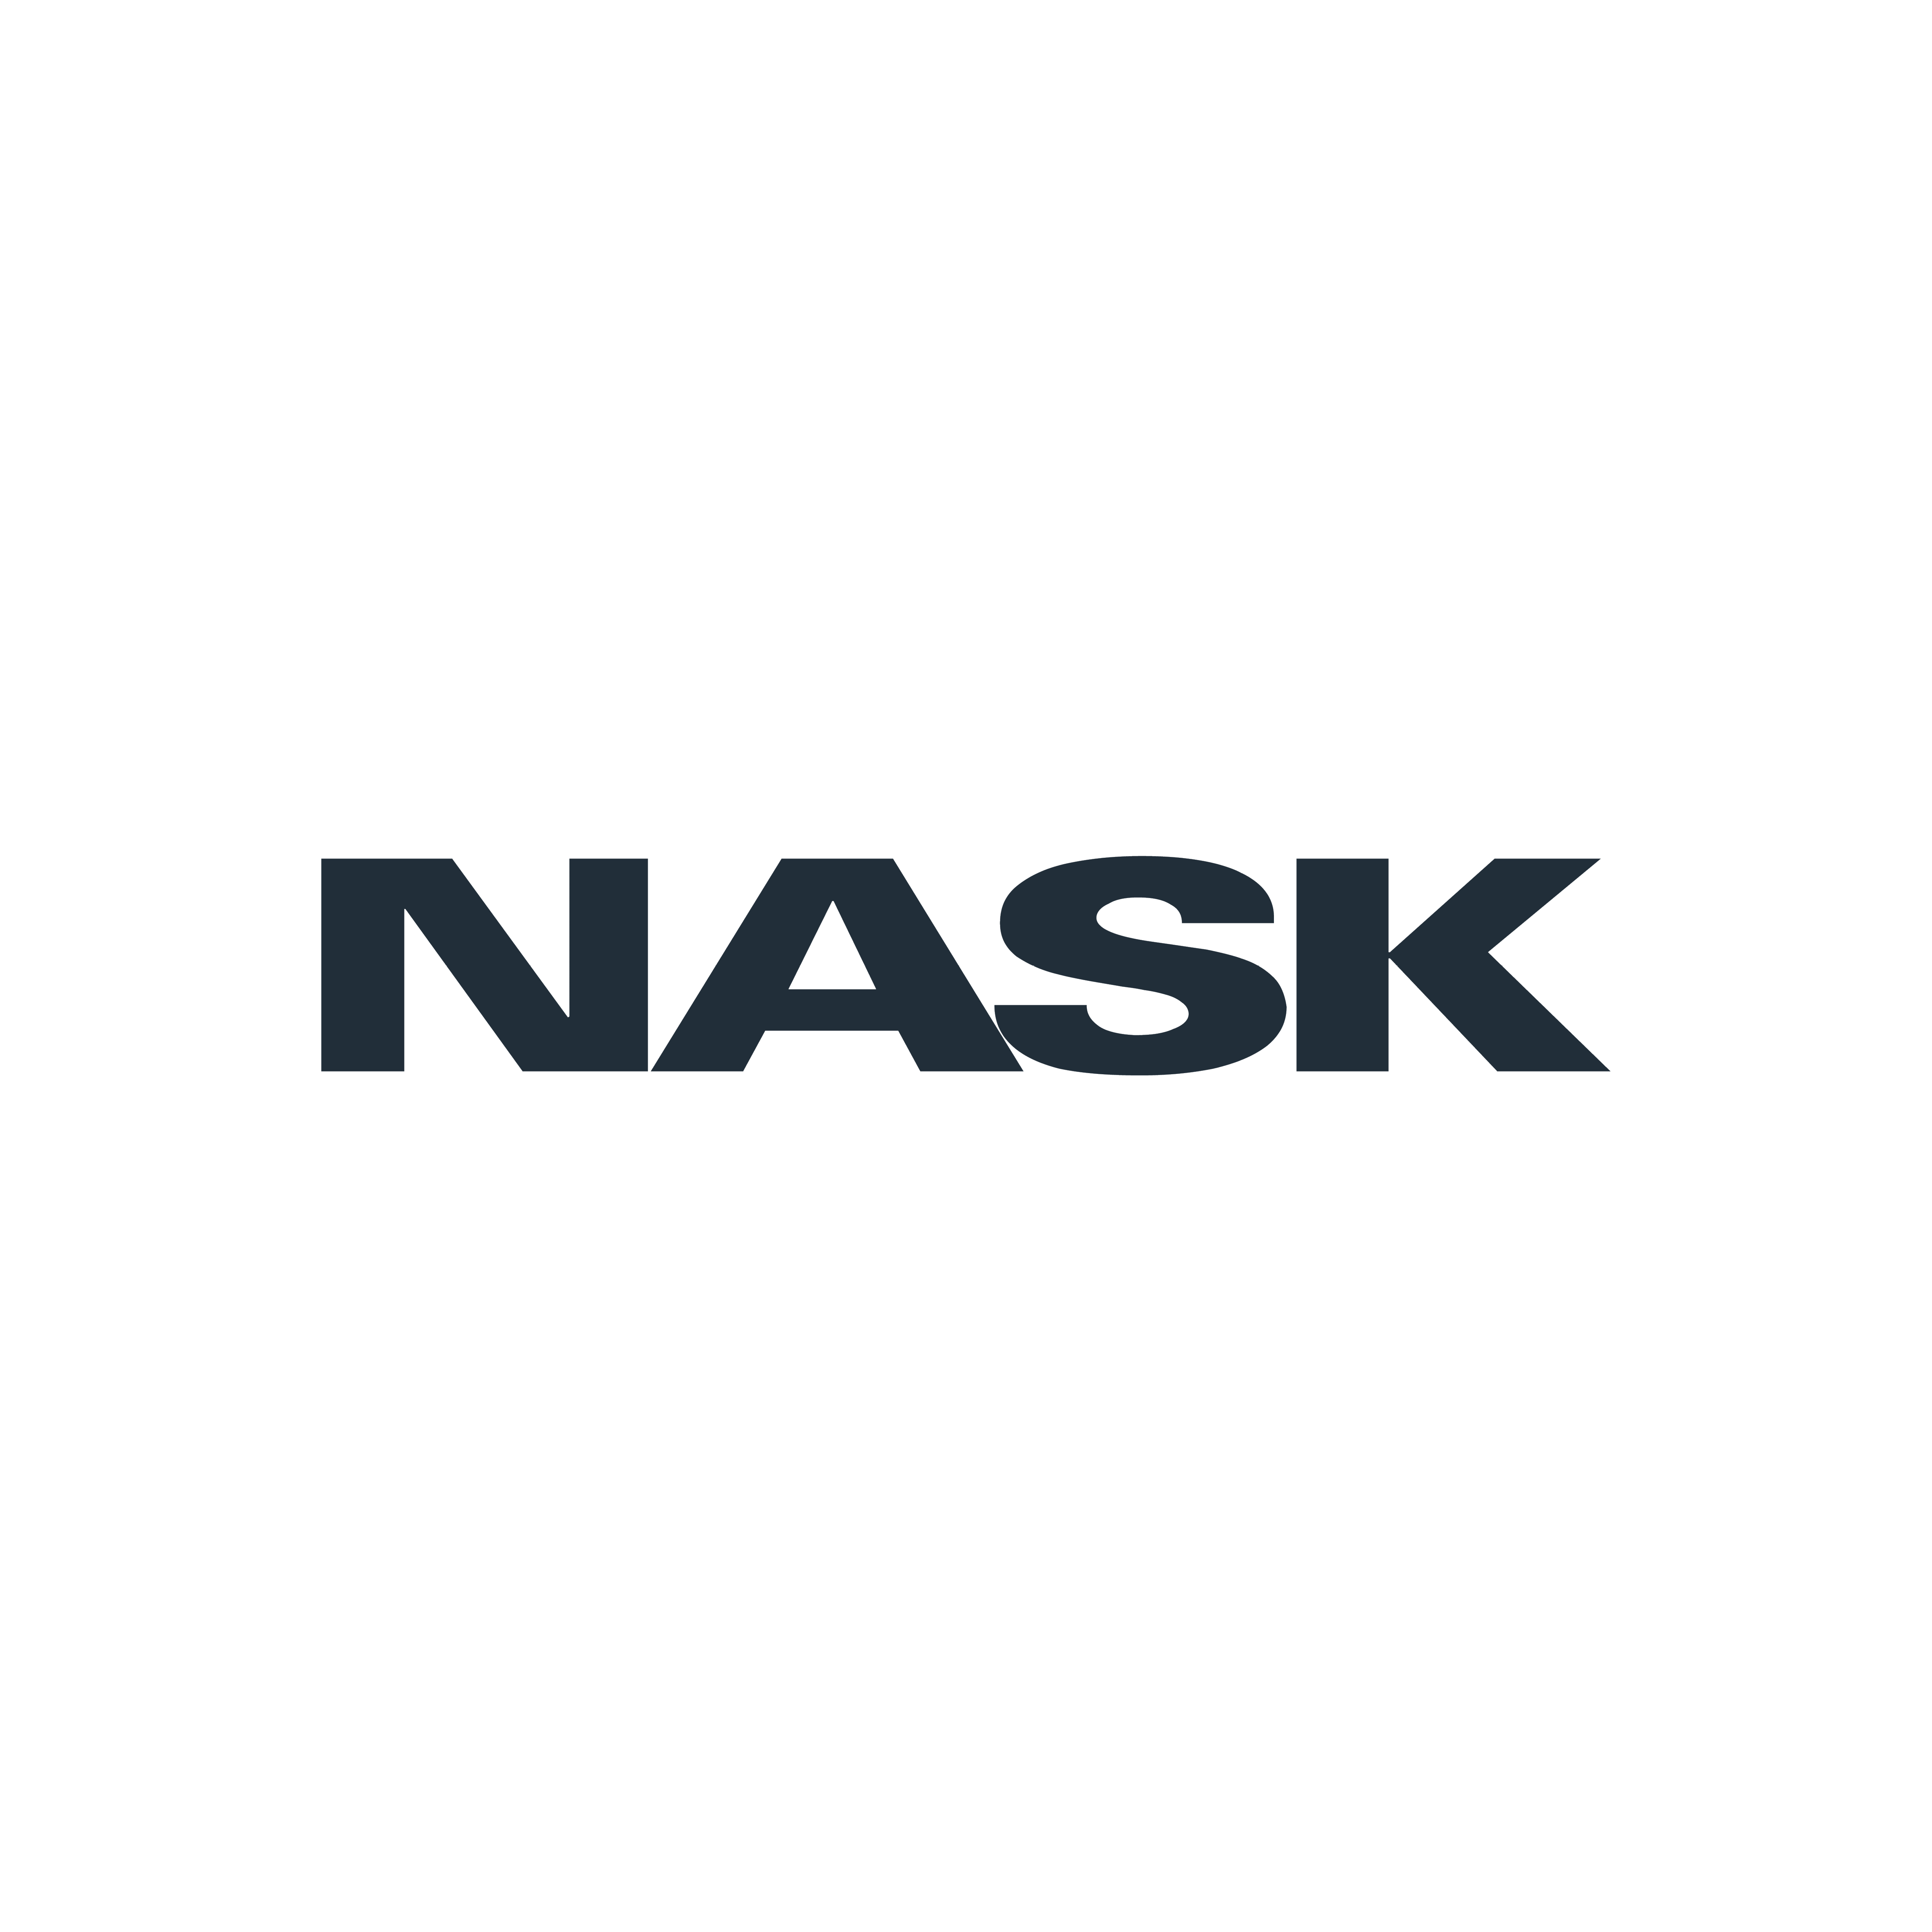 Nask logo